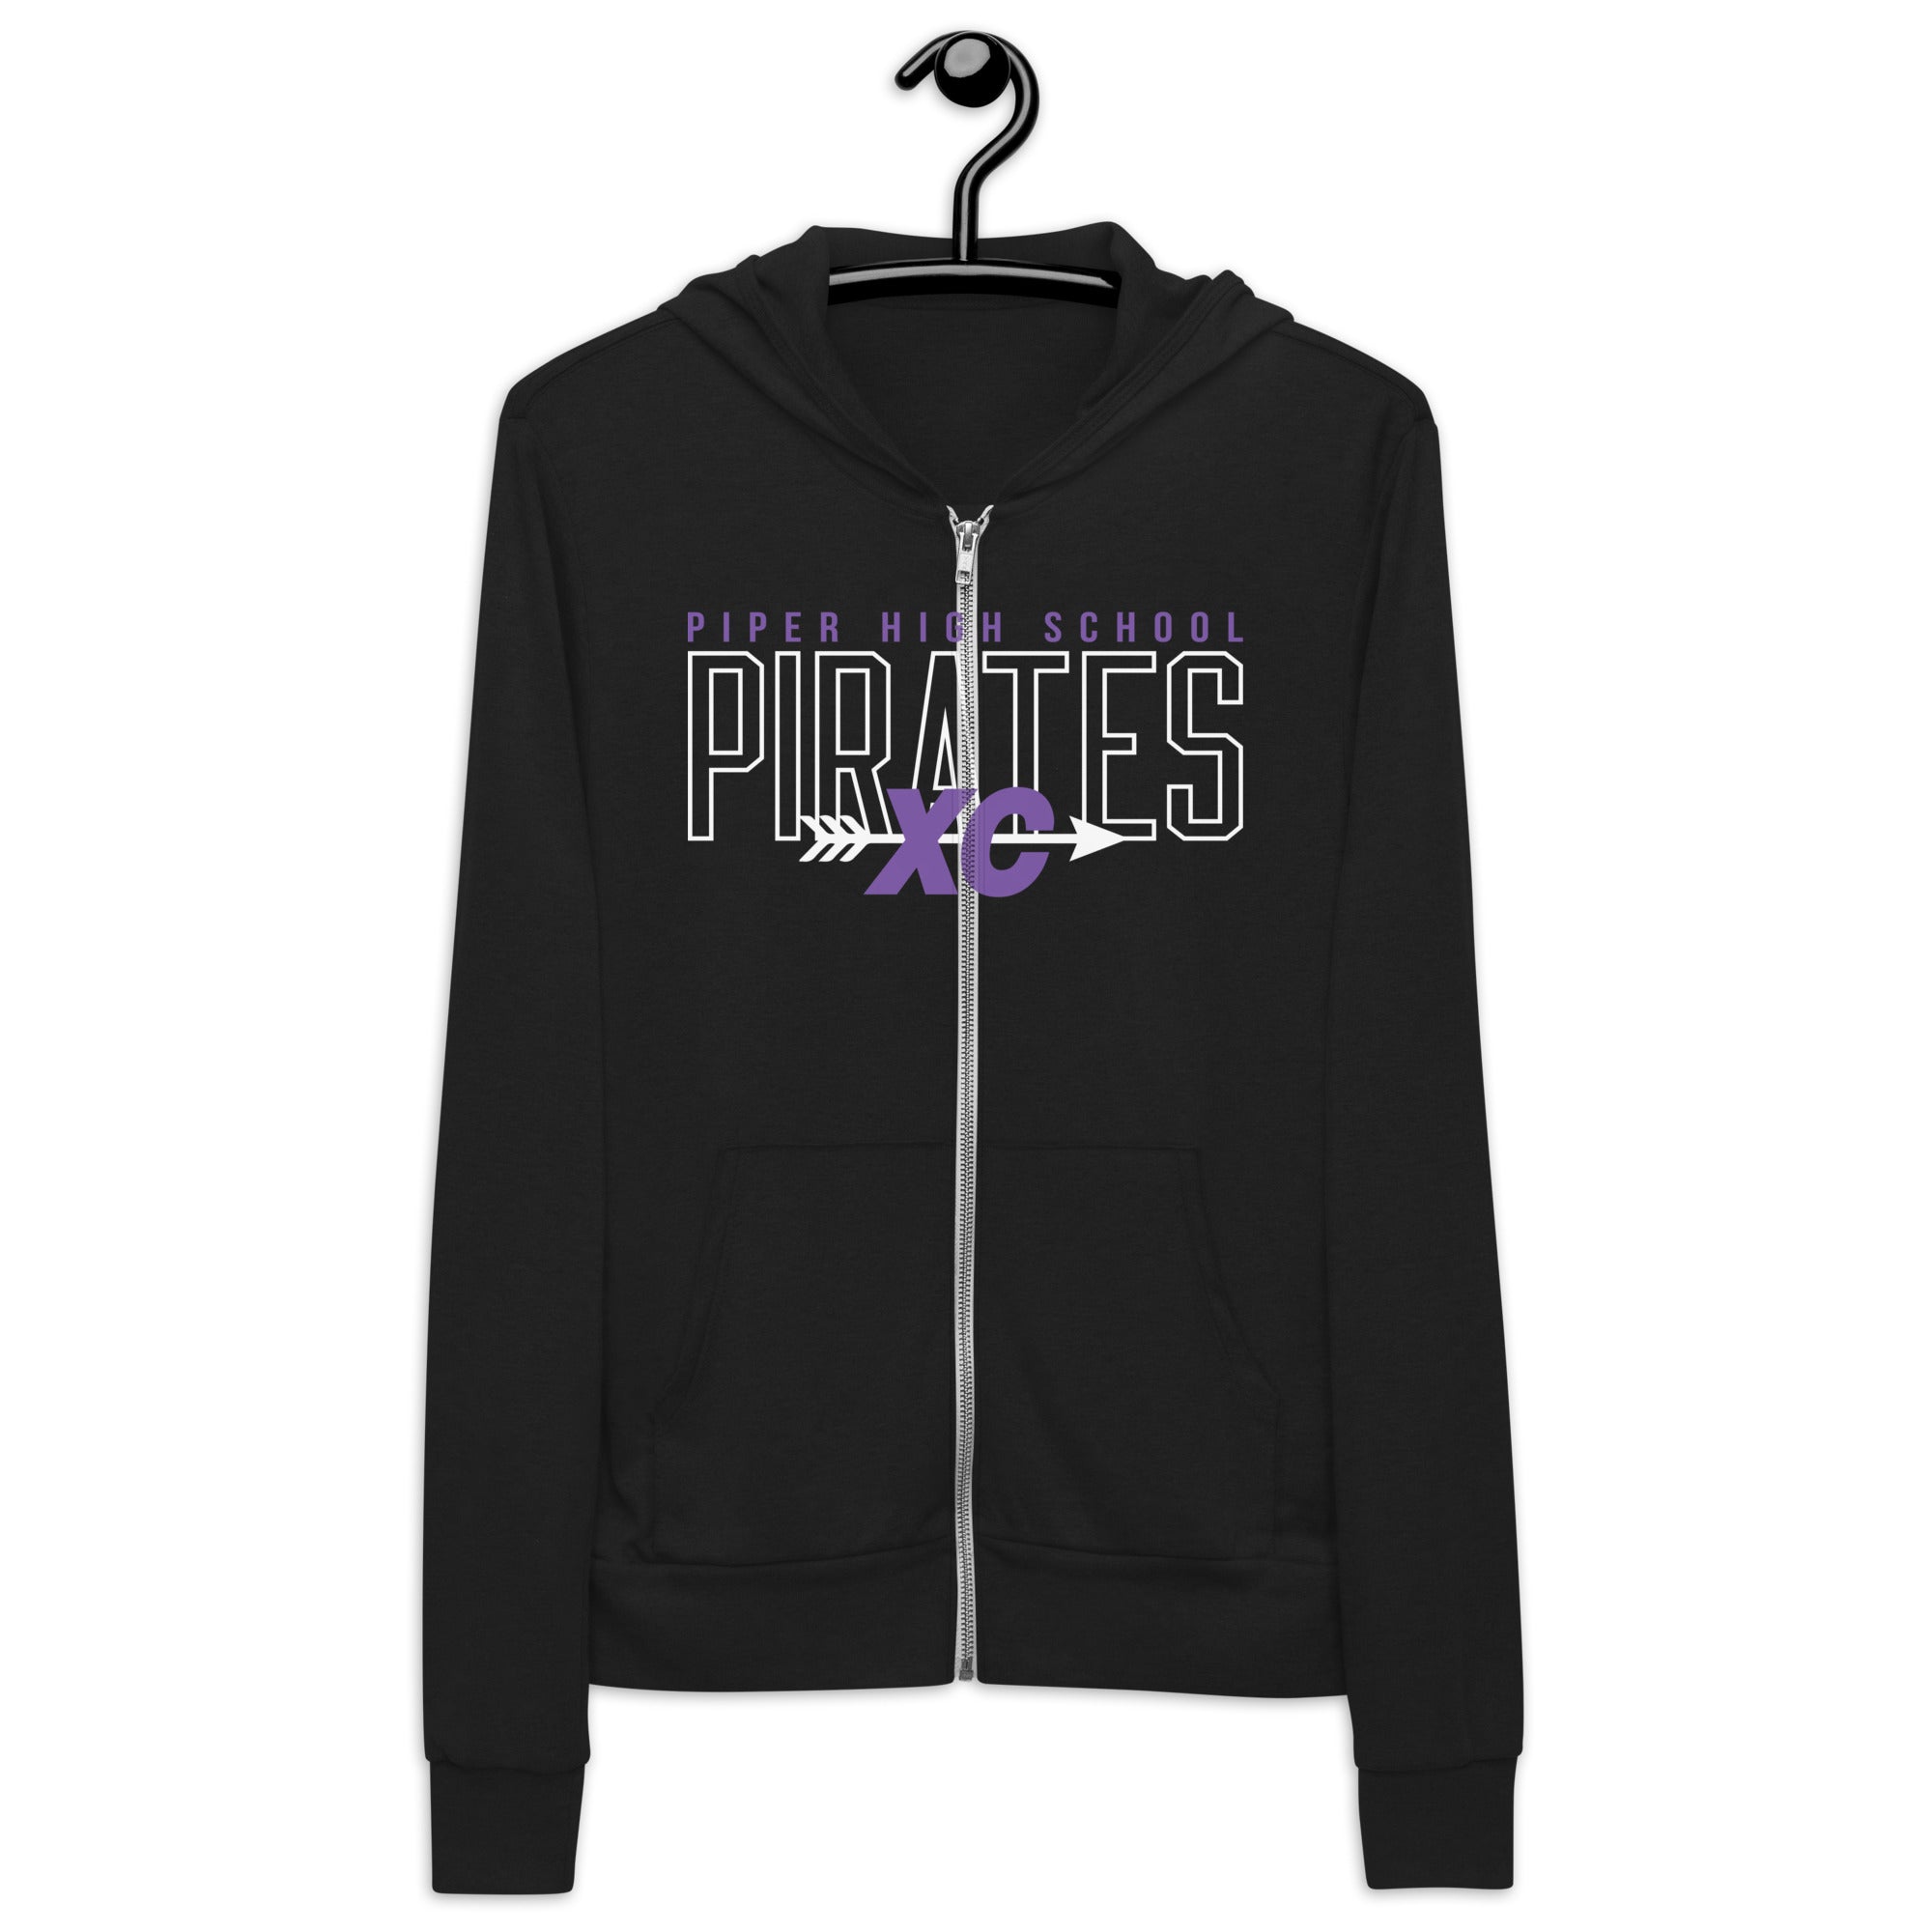 Piper High School Pirates XC Unisex zip hoodie